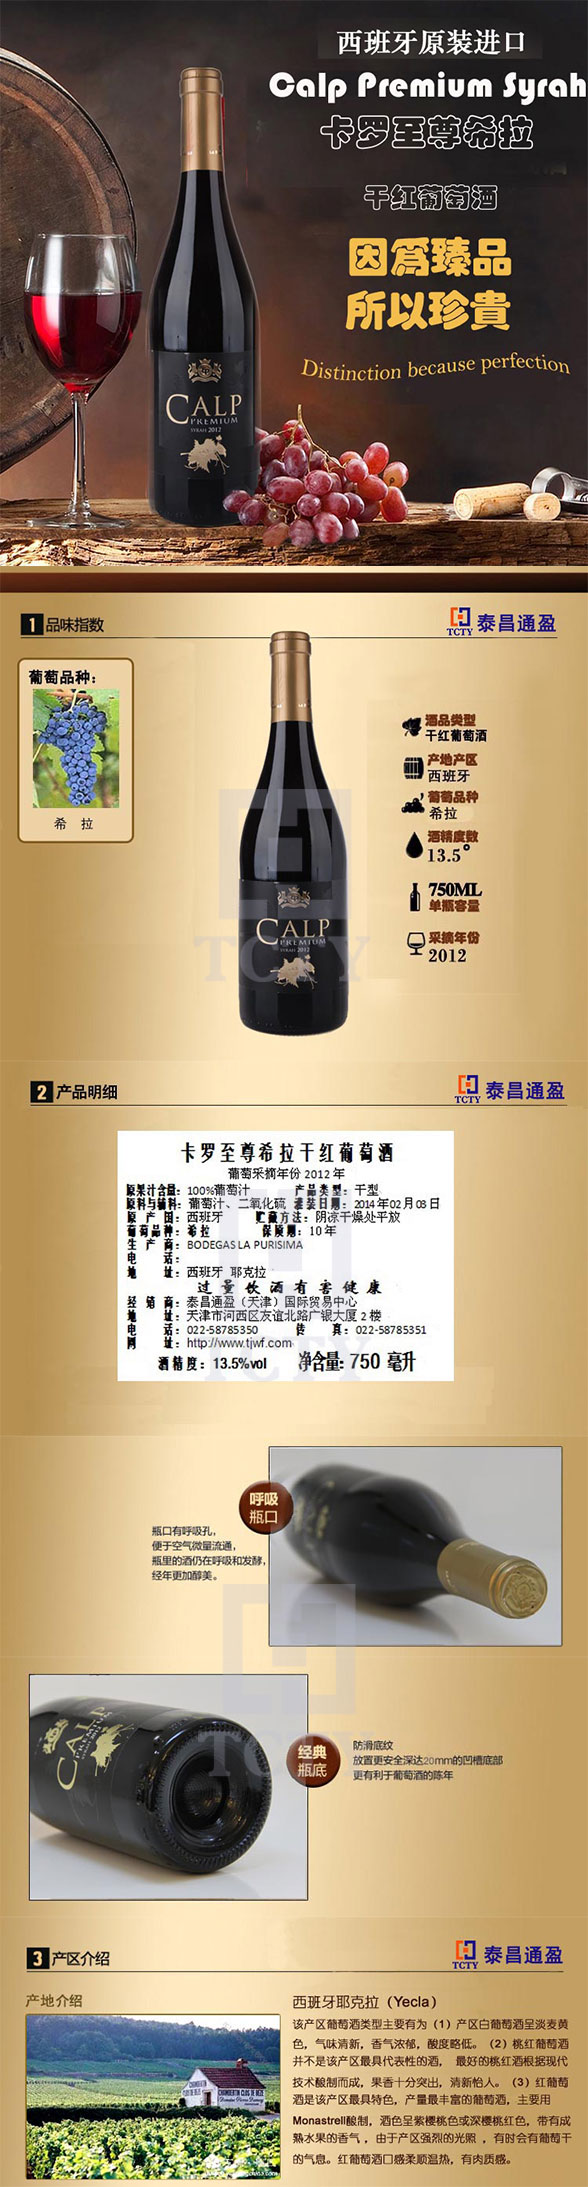 Calp Premium Syrah卡罗至尊希拉干红葡萄酒